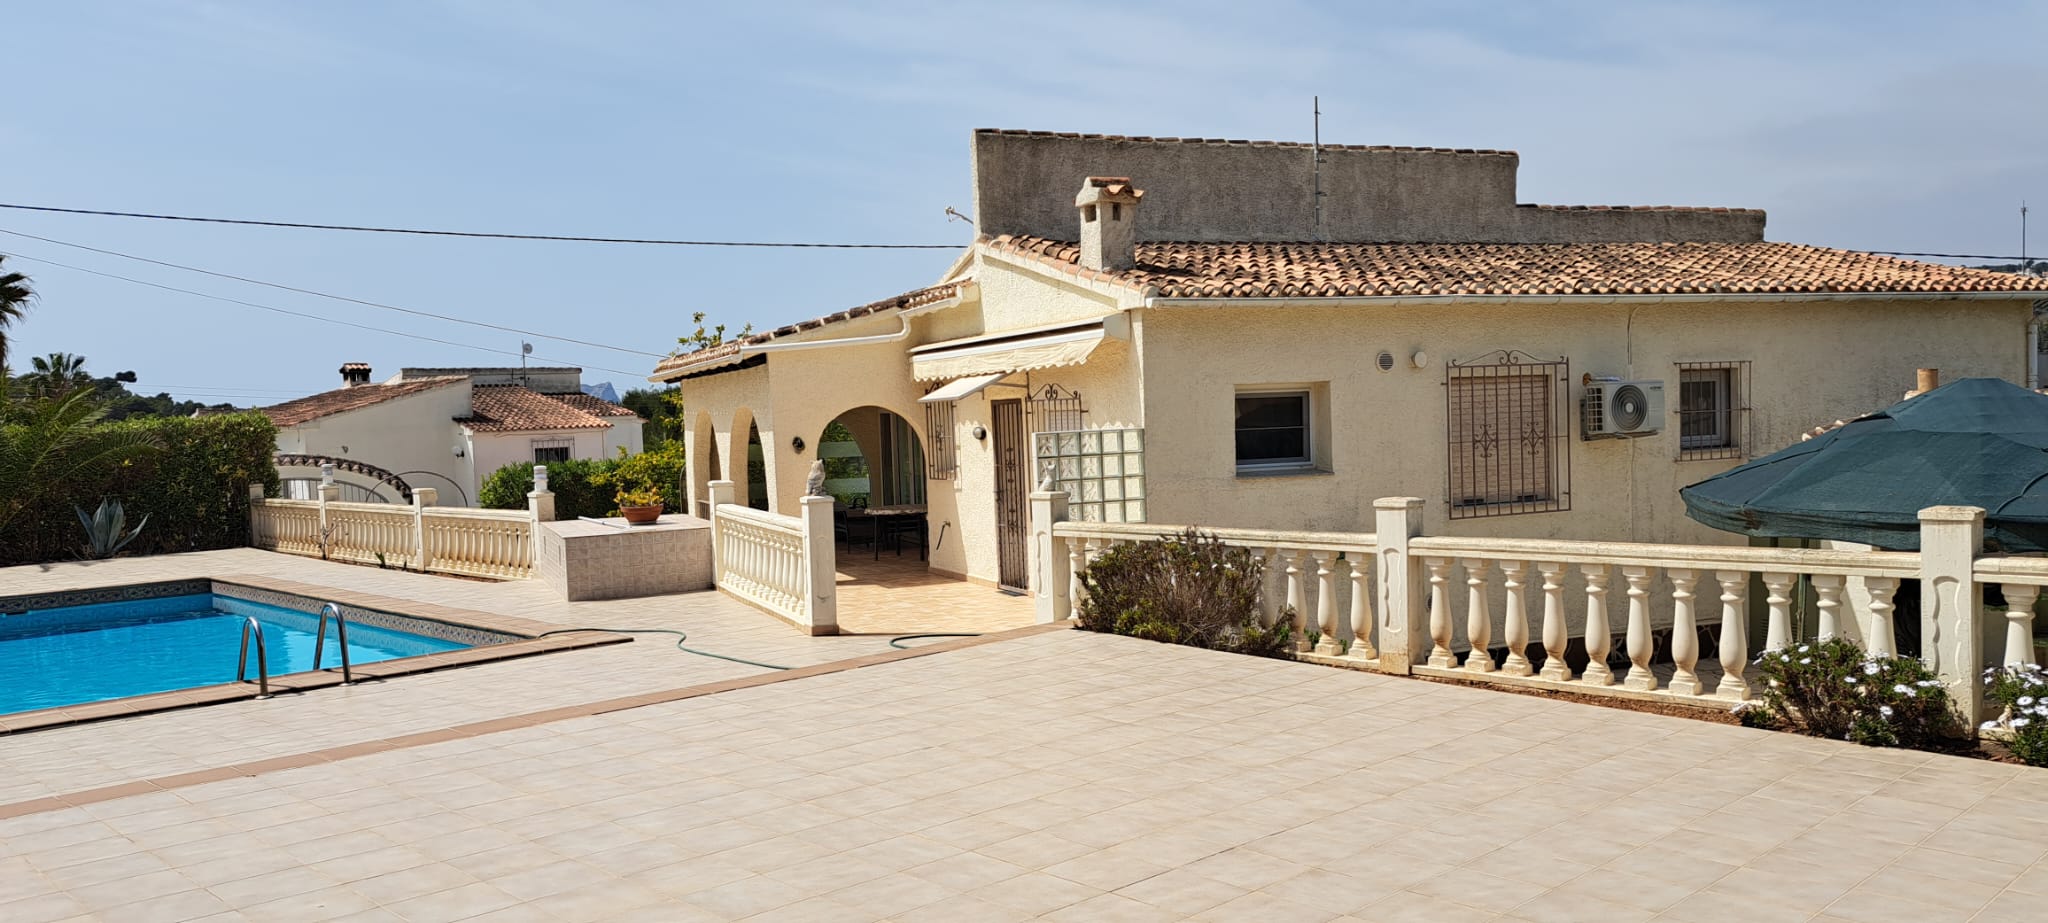 Casa / Chalet en Alquiler vacacional en Moraira, Alicante